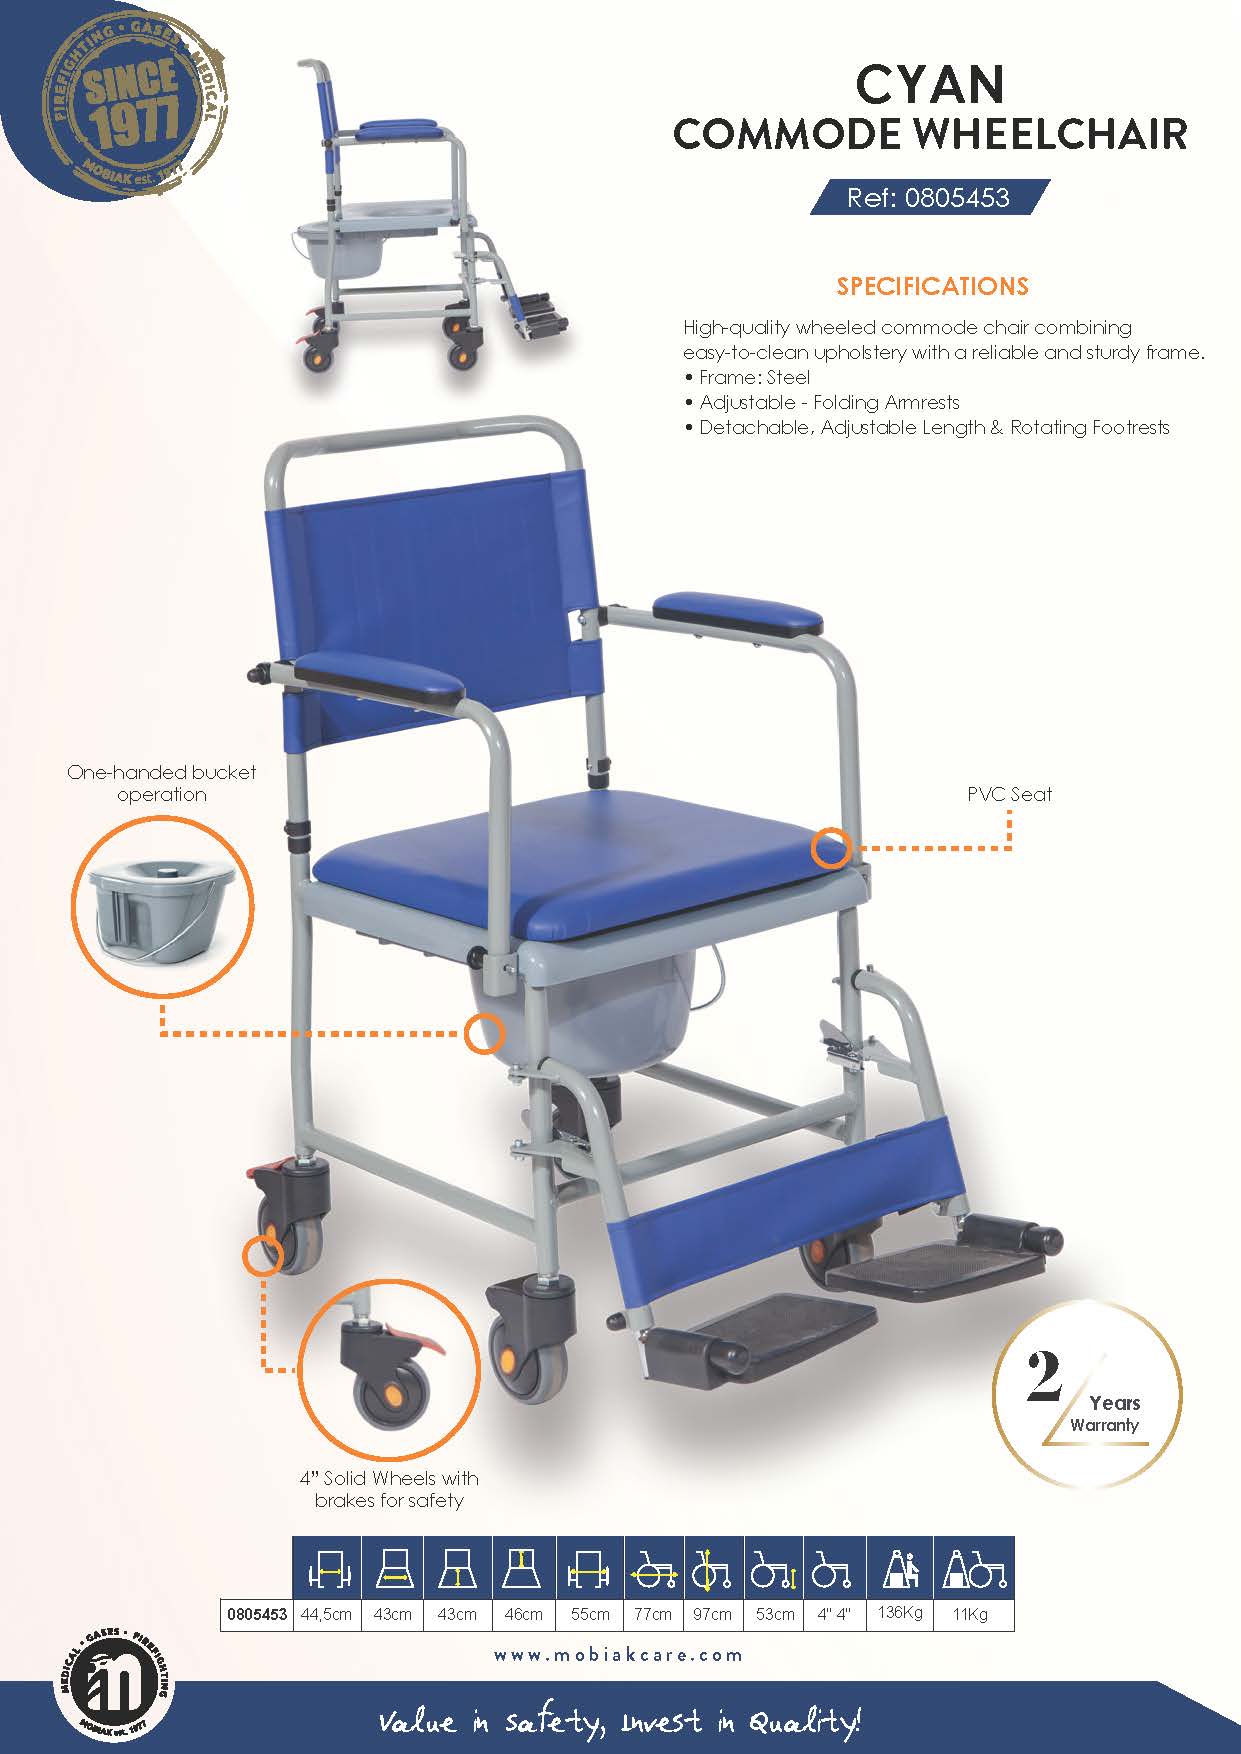 Cyan Commode Wheelchair